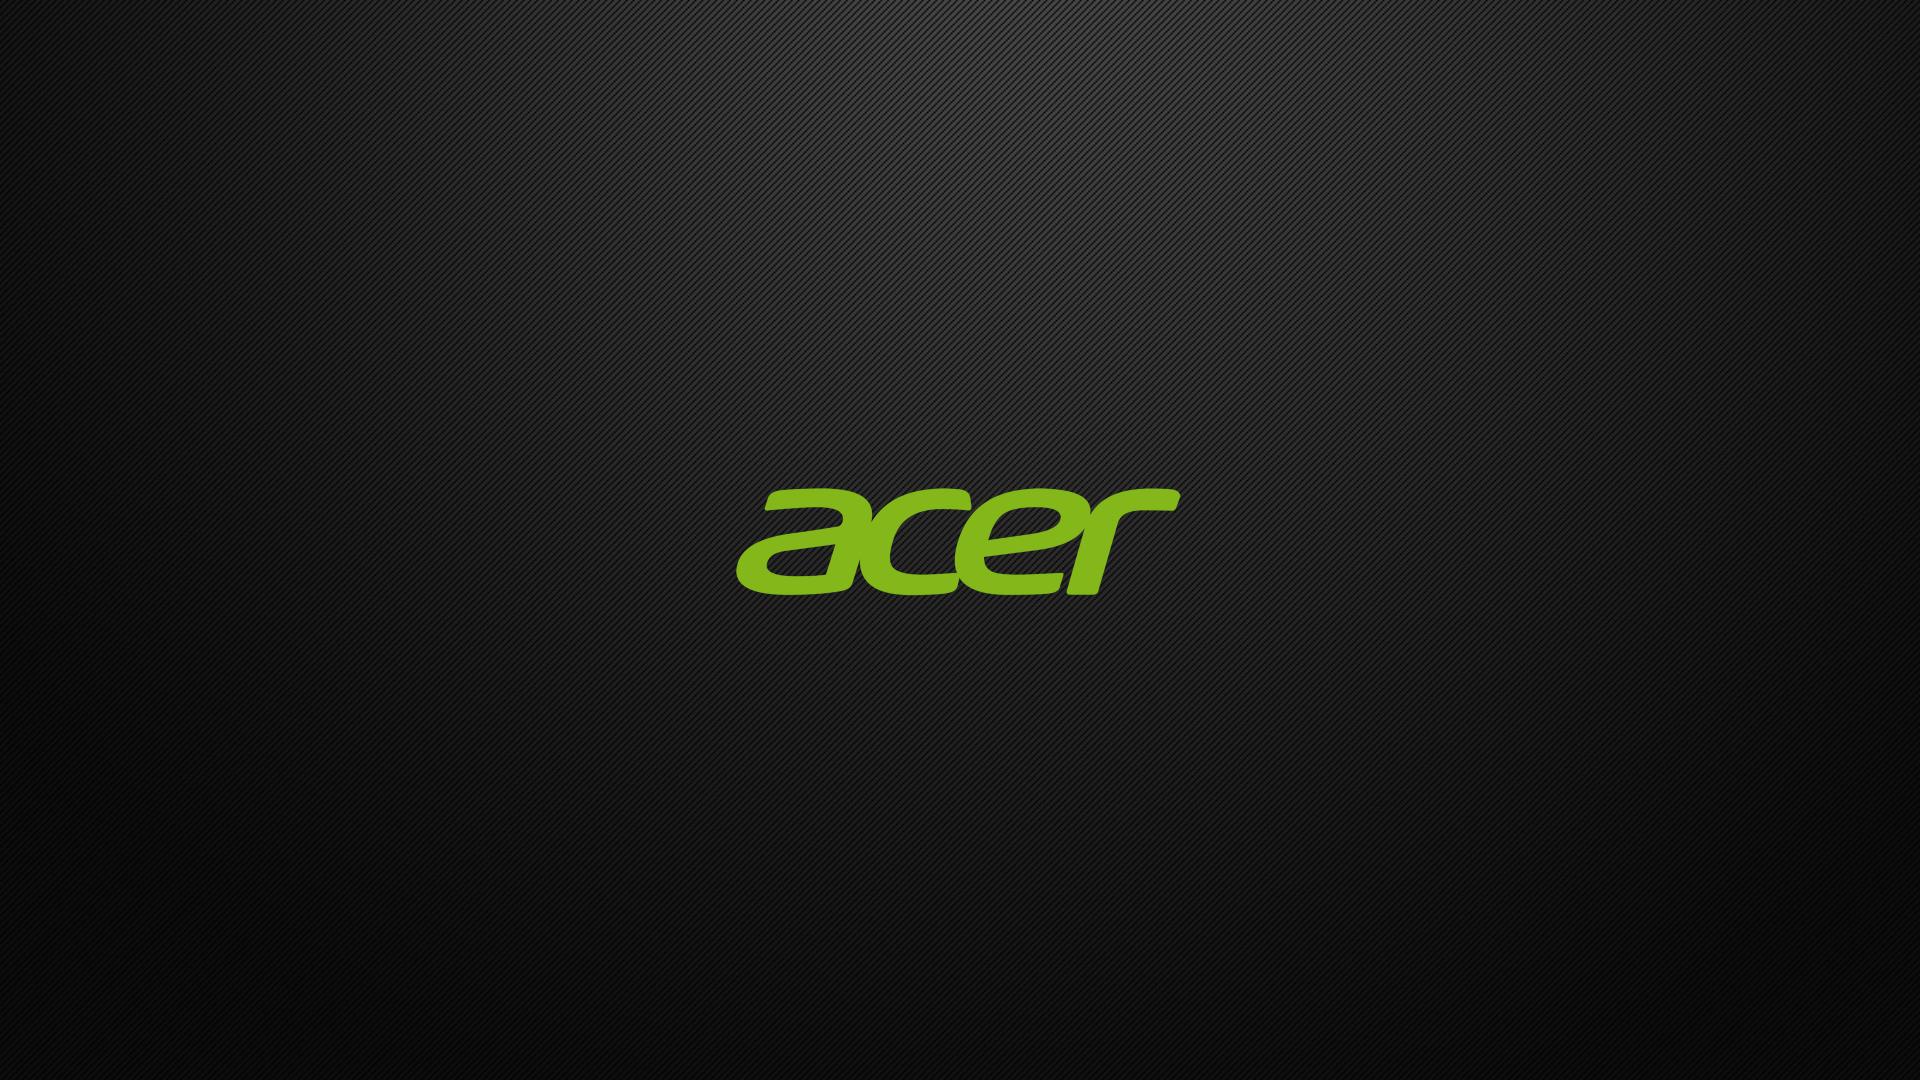 4K Black Wallpaper for Windows 10 - of 10 Acer Laptops Wallpaper. Wallpaper Download. High Resolution Wallpaper